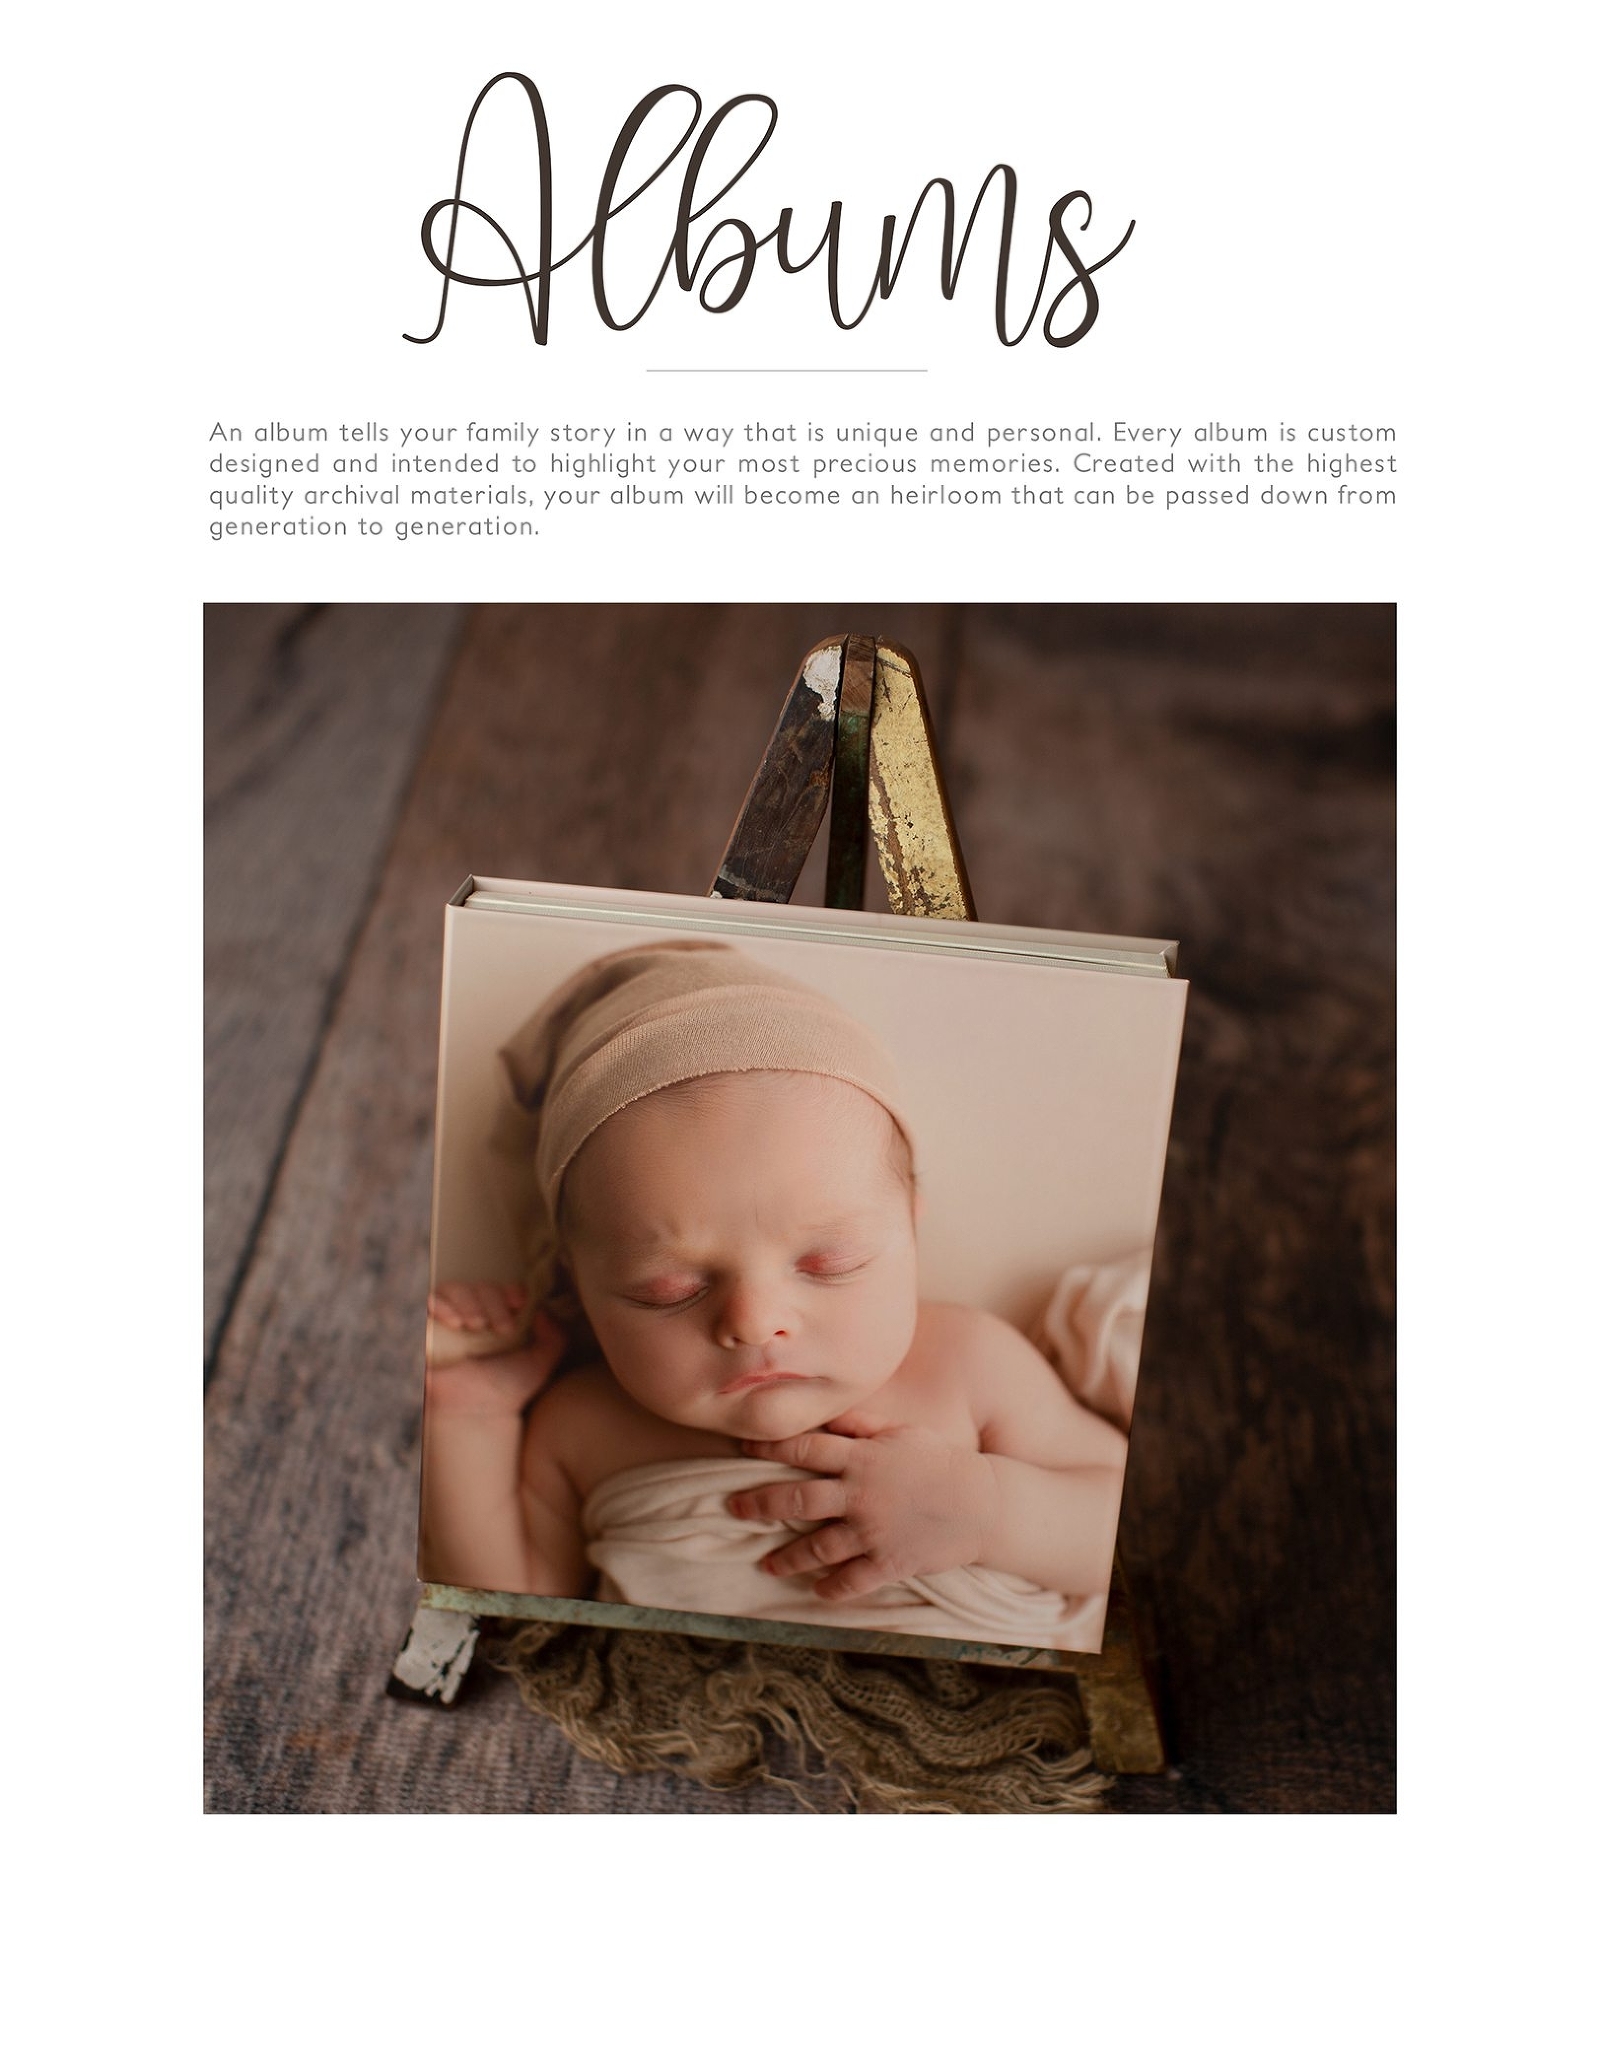 newborn photography seattle